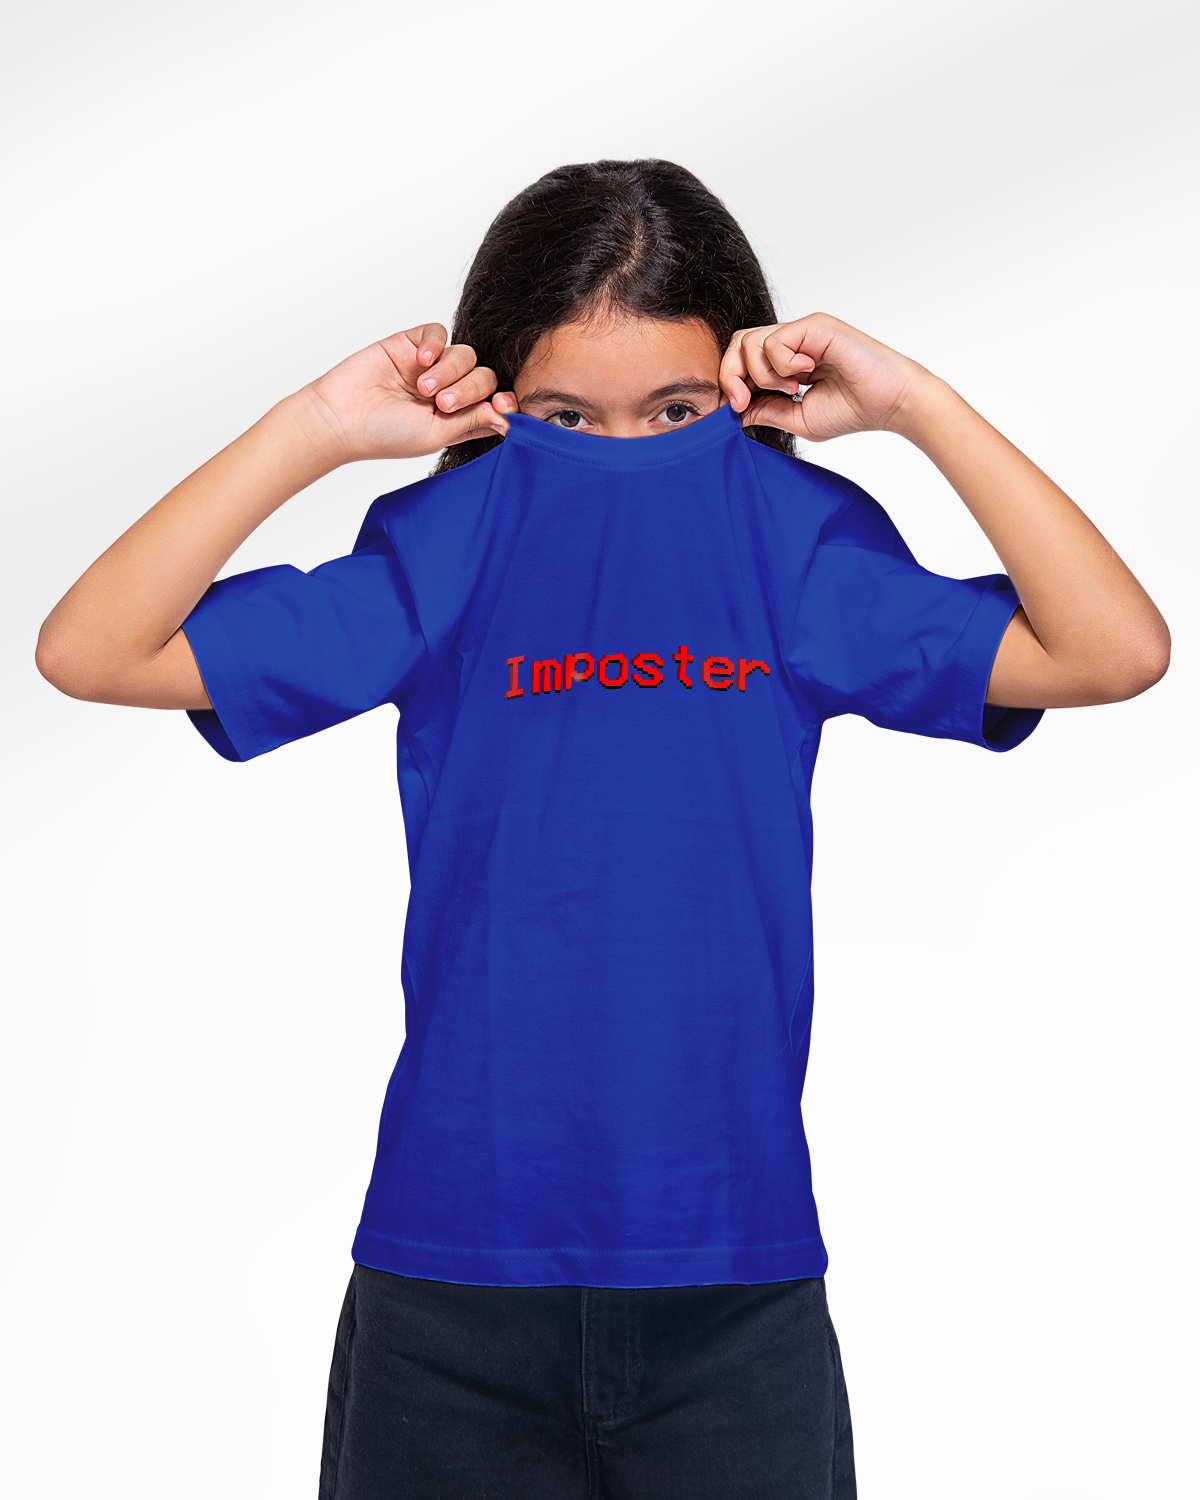 T-shirt For Girls (Imposter)